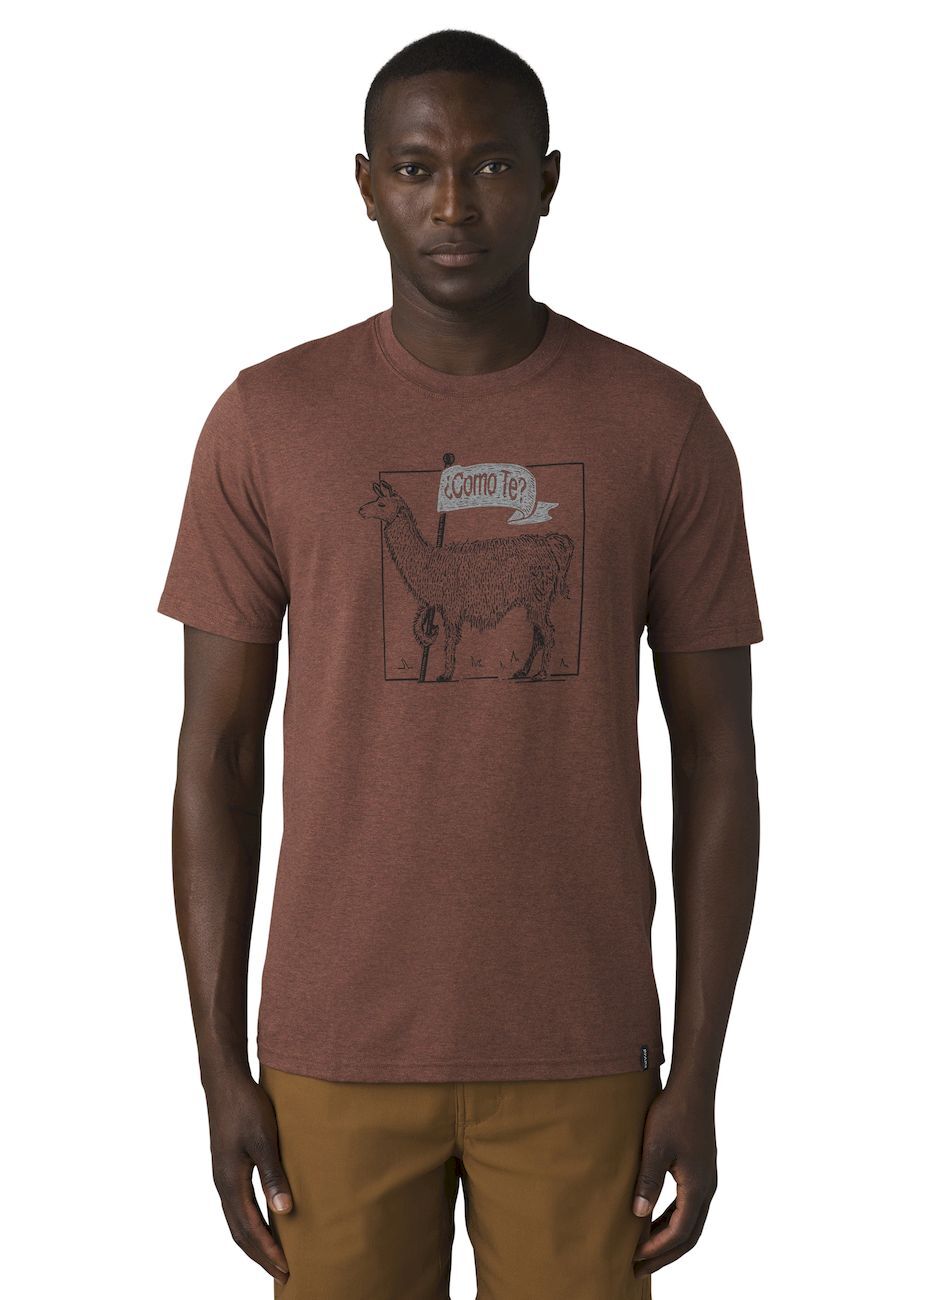 Prana Como Te Llama Journeyman 2 - T-shirt - Men's